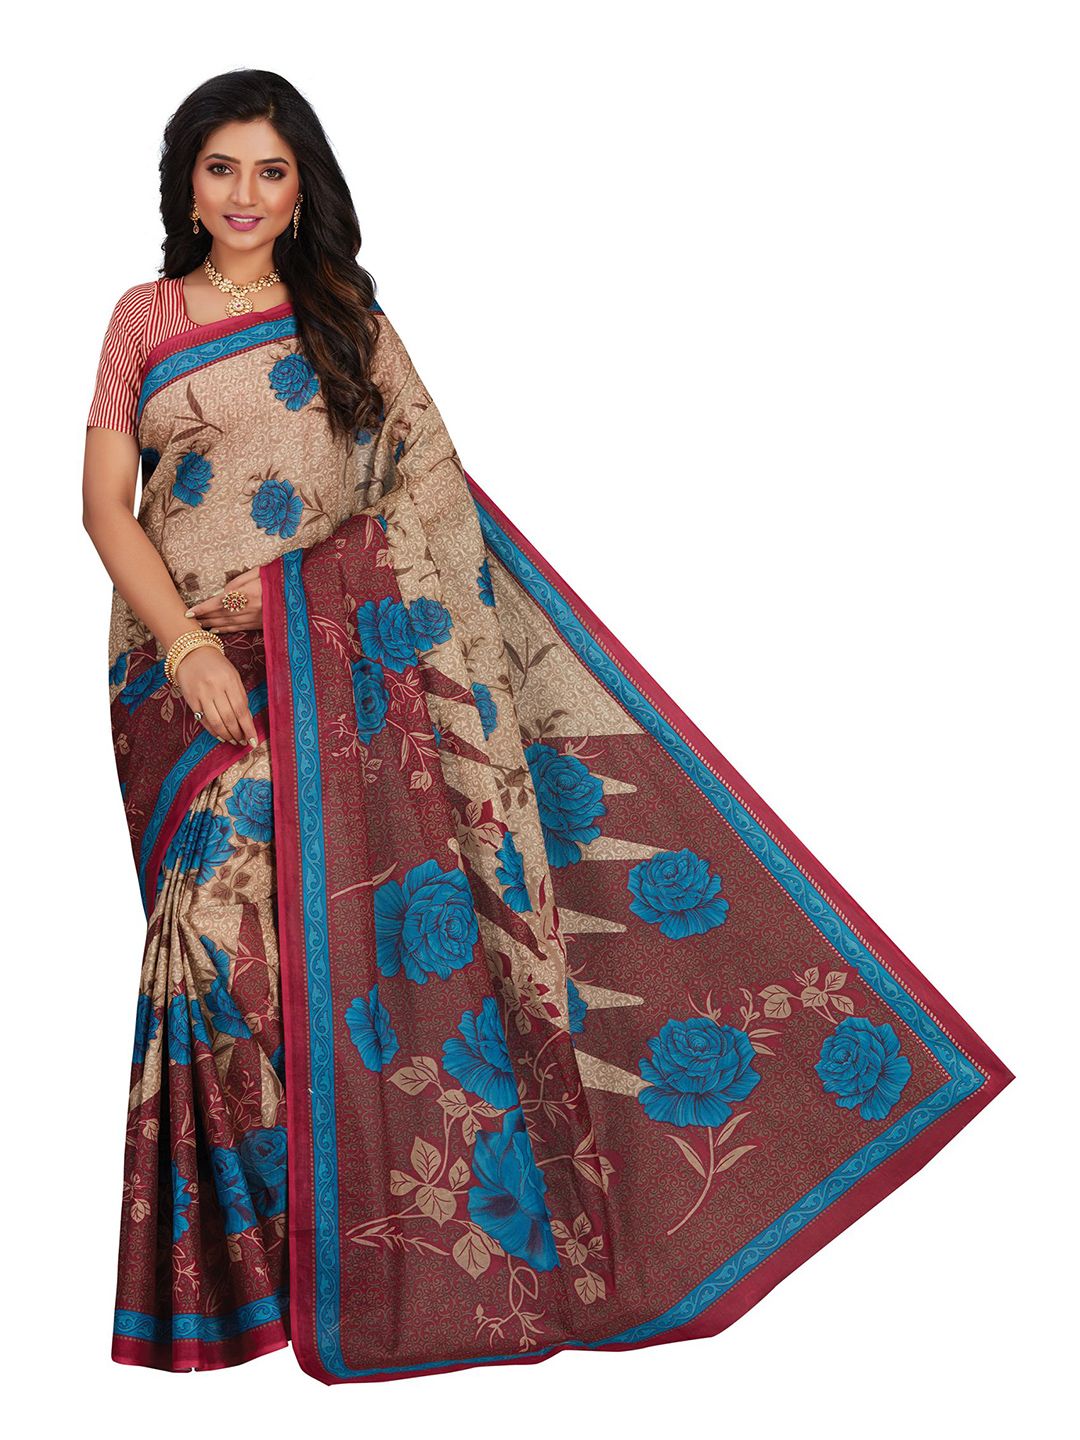 SHANVIKA Beige & Maroon Floral Pure Cotton Block Print Saree Price in India